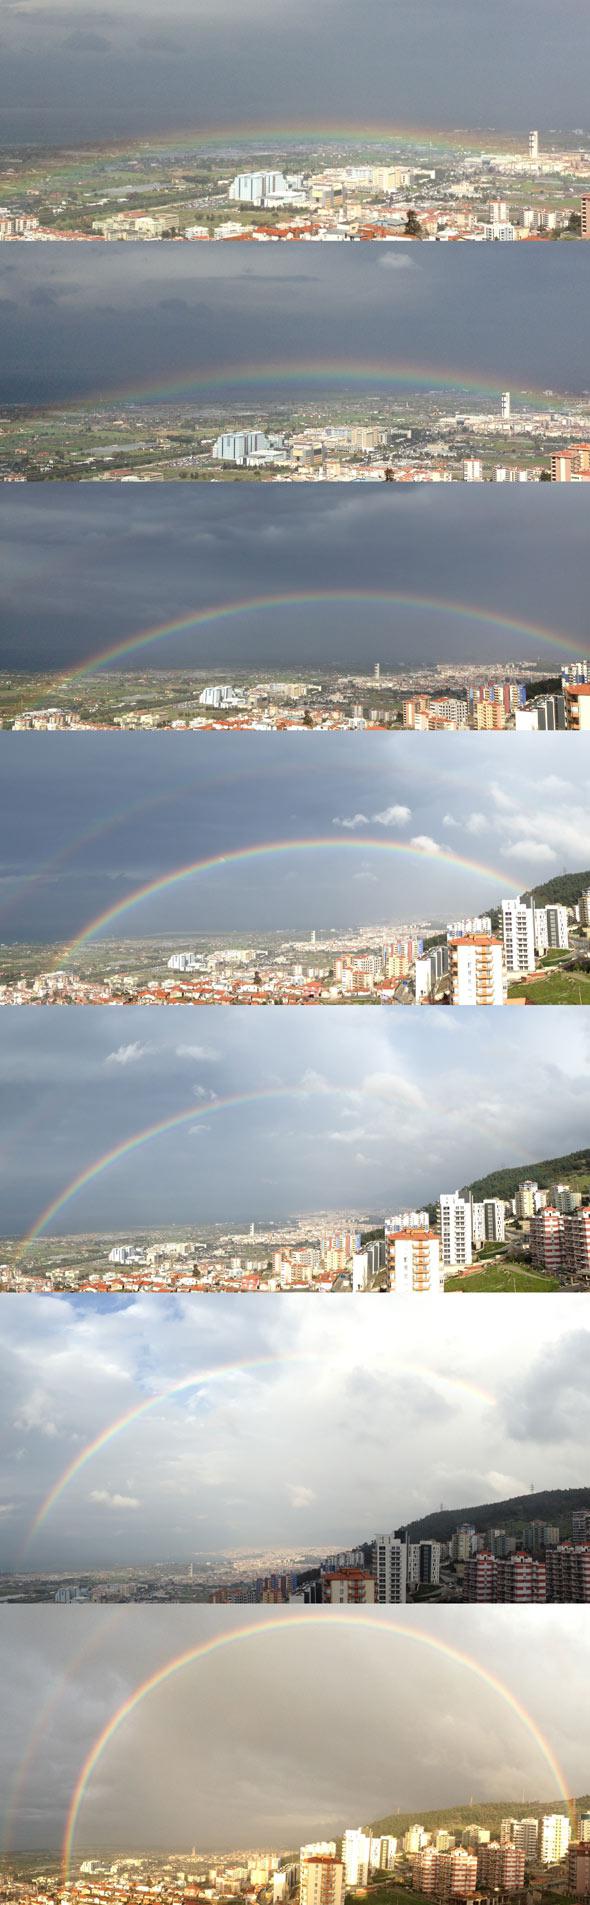 A rainbow rises